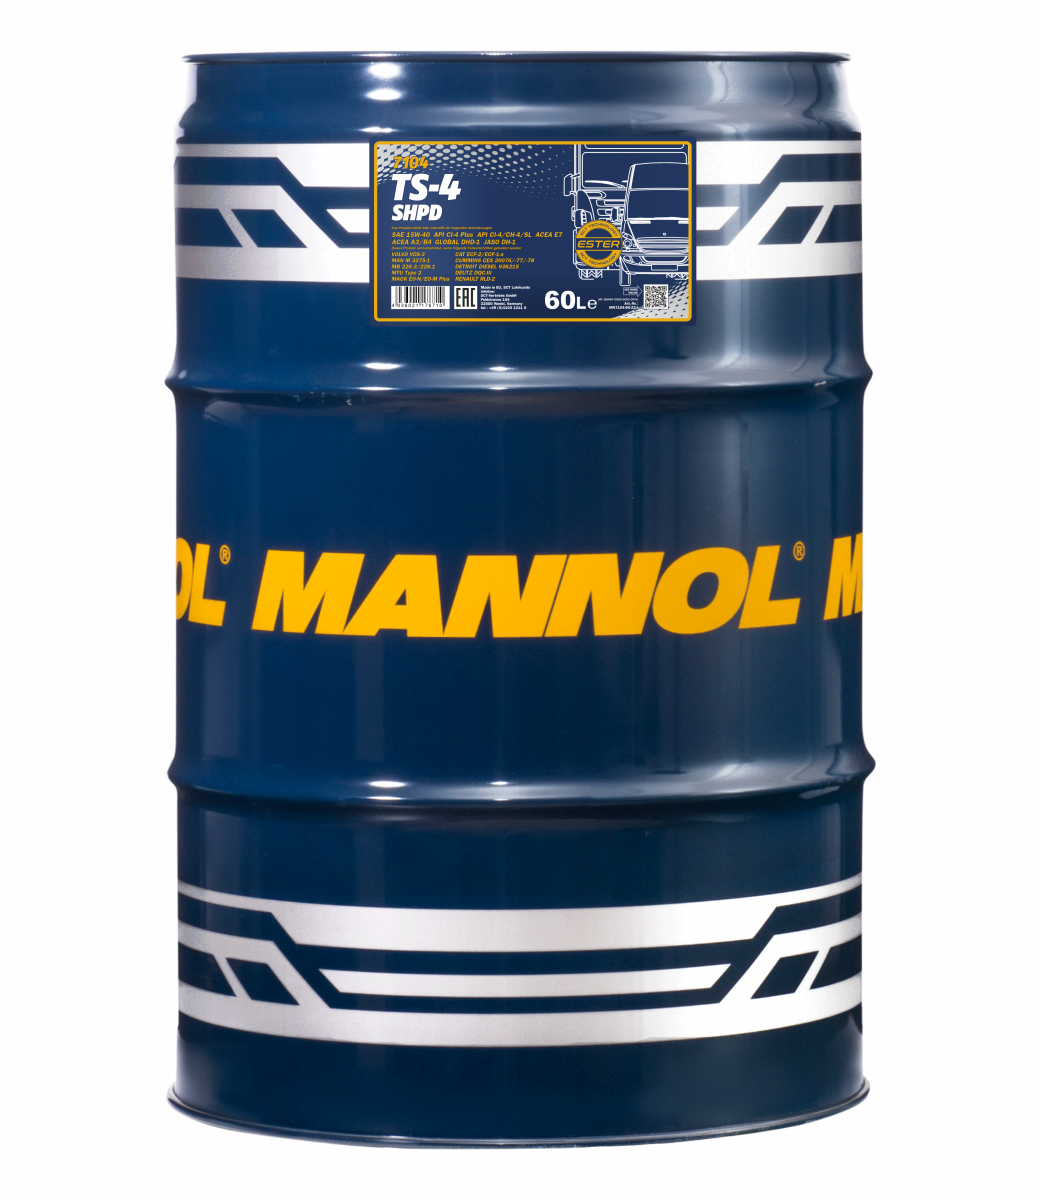 15W-40 Mannol 7104 TS-4 SHPD Extra Motoröl 60 Liter